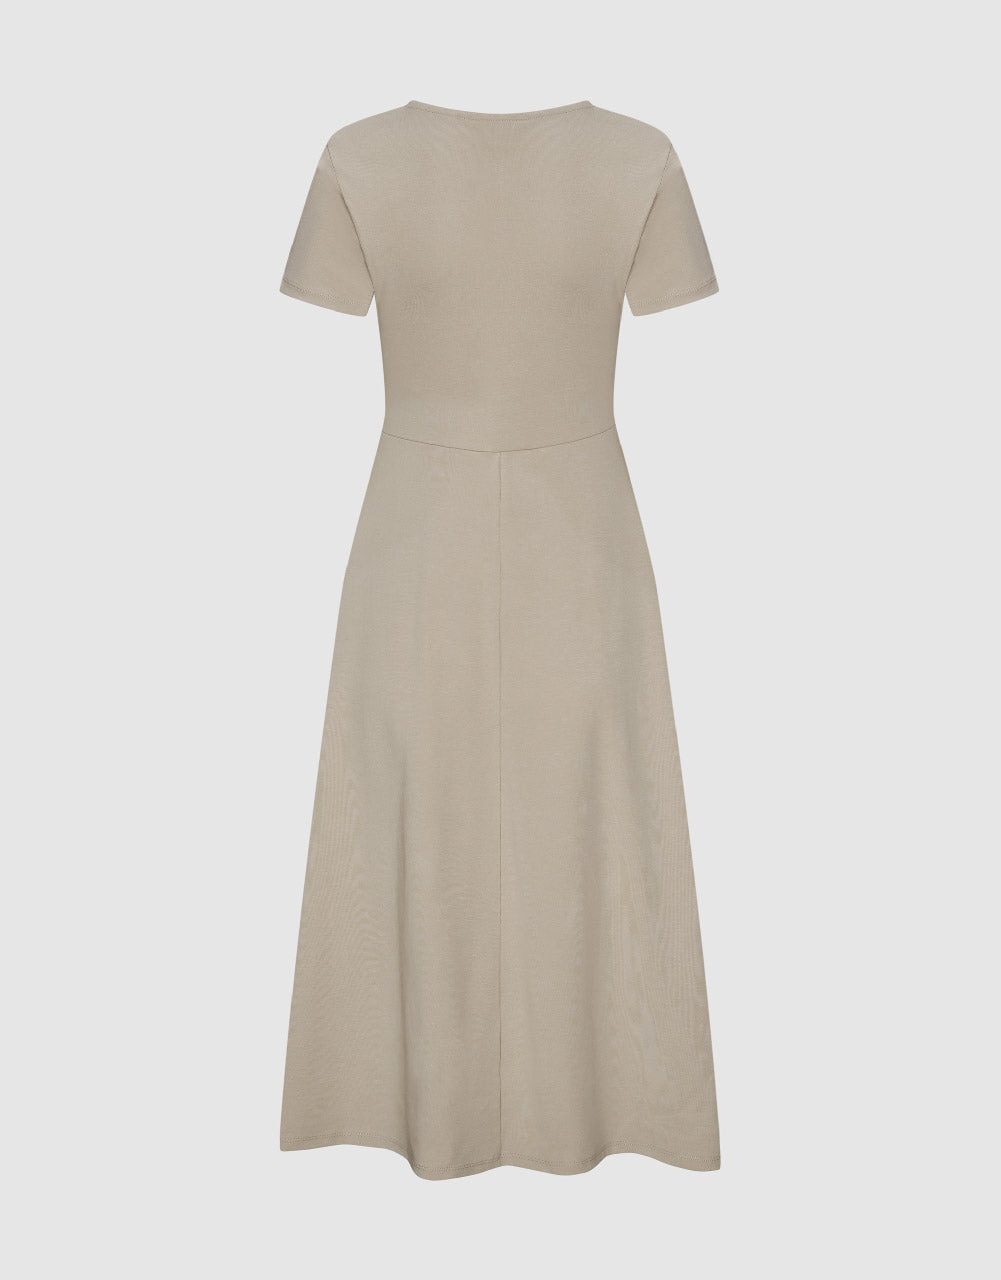 Standard Sleeve V-Neck A-Line Dress